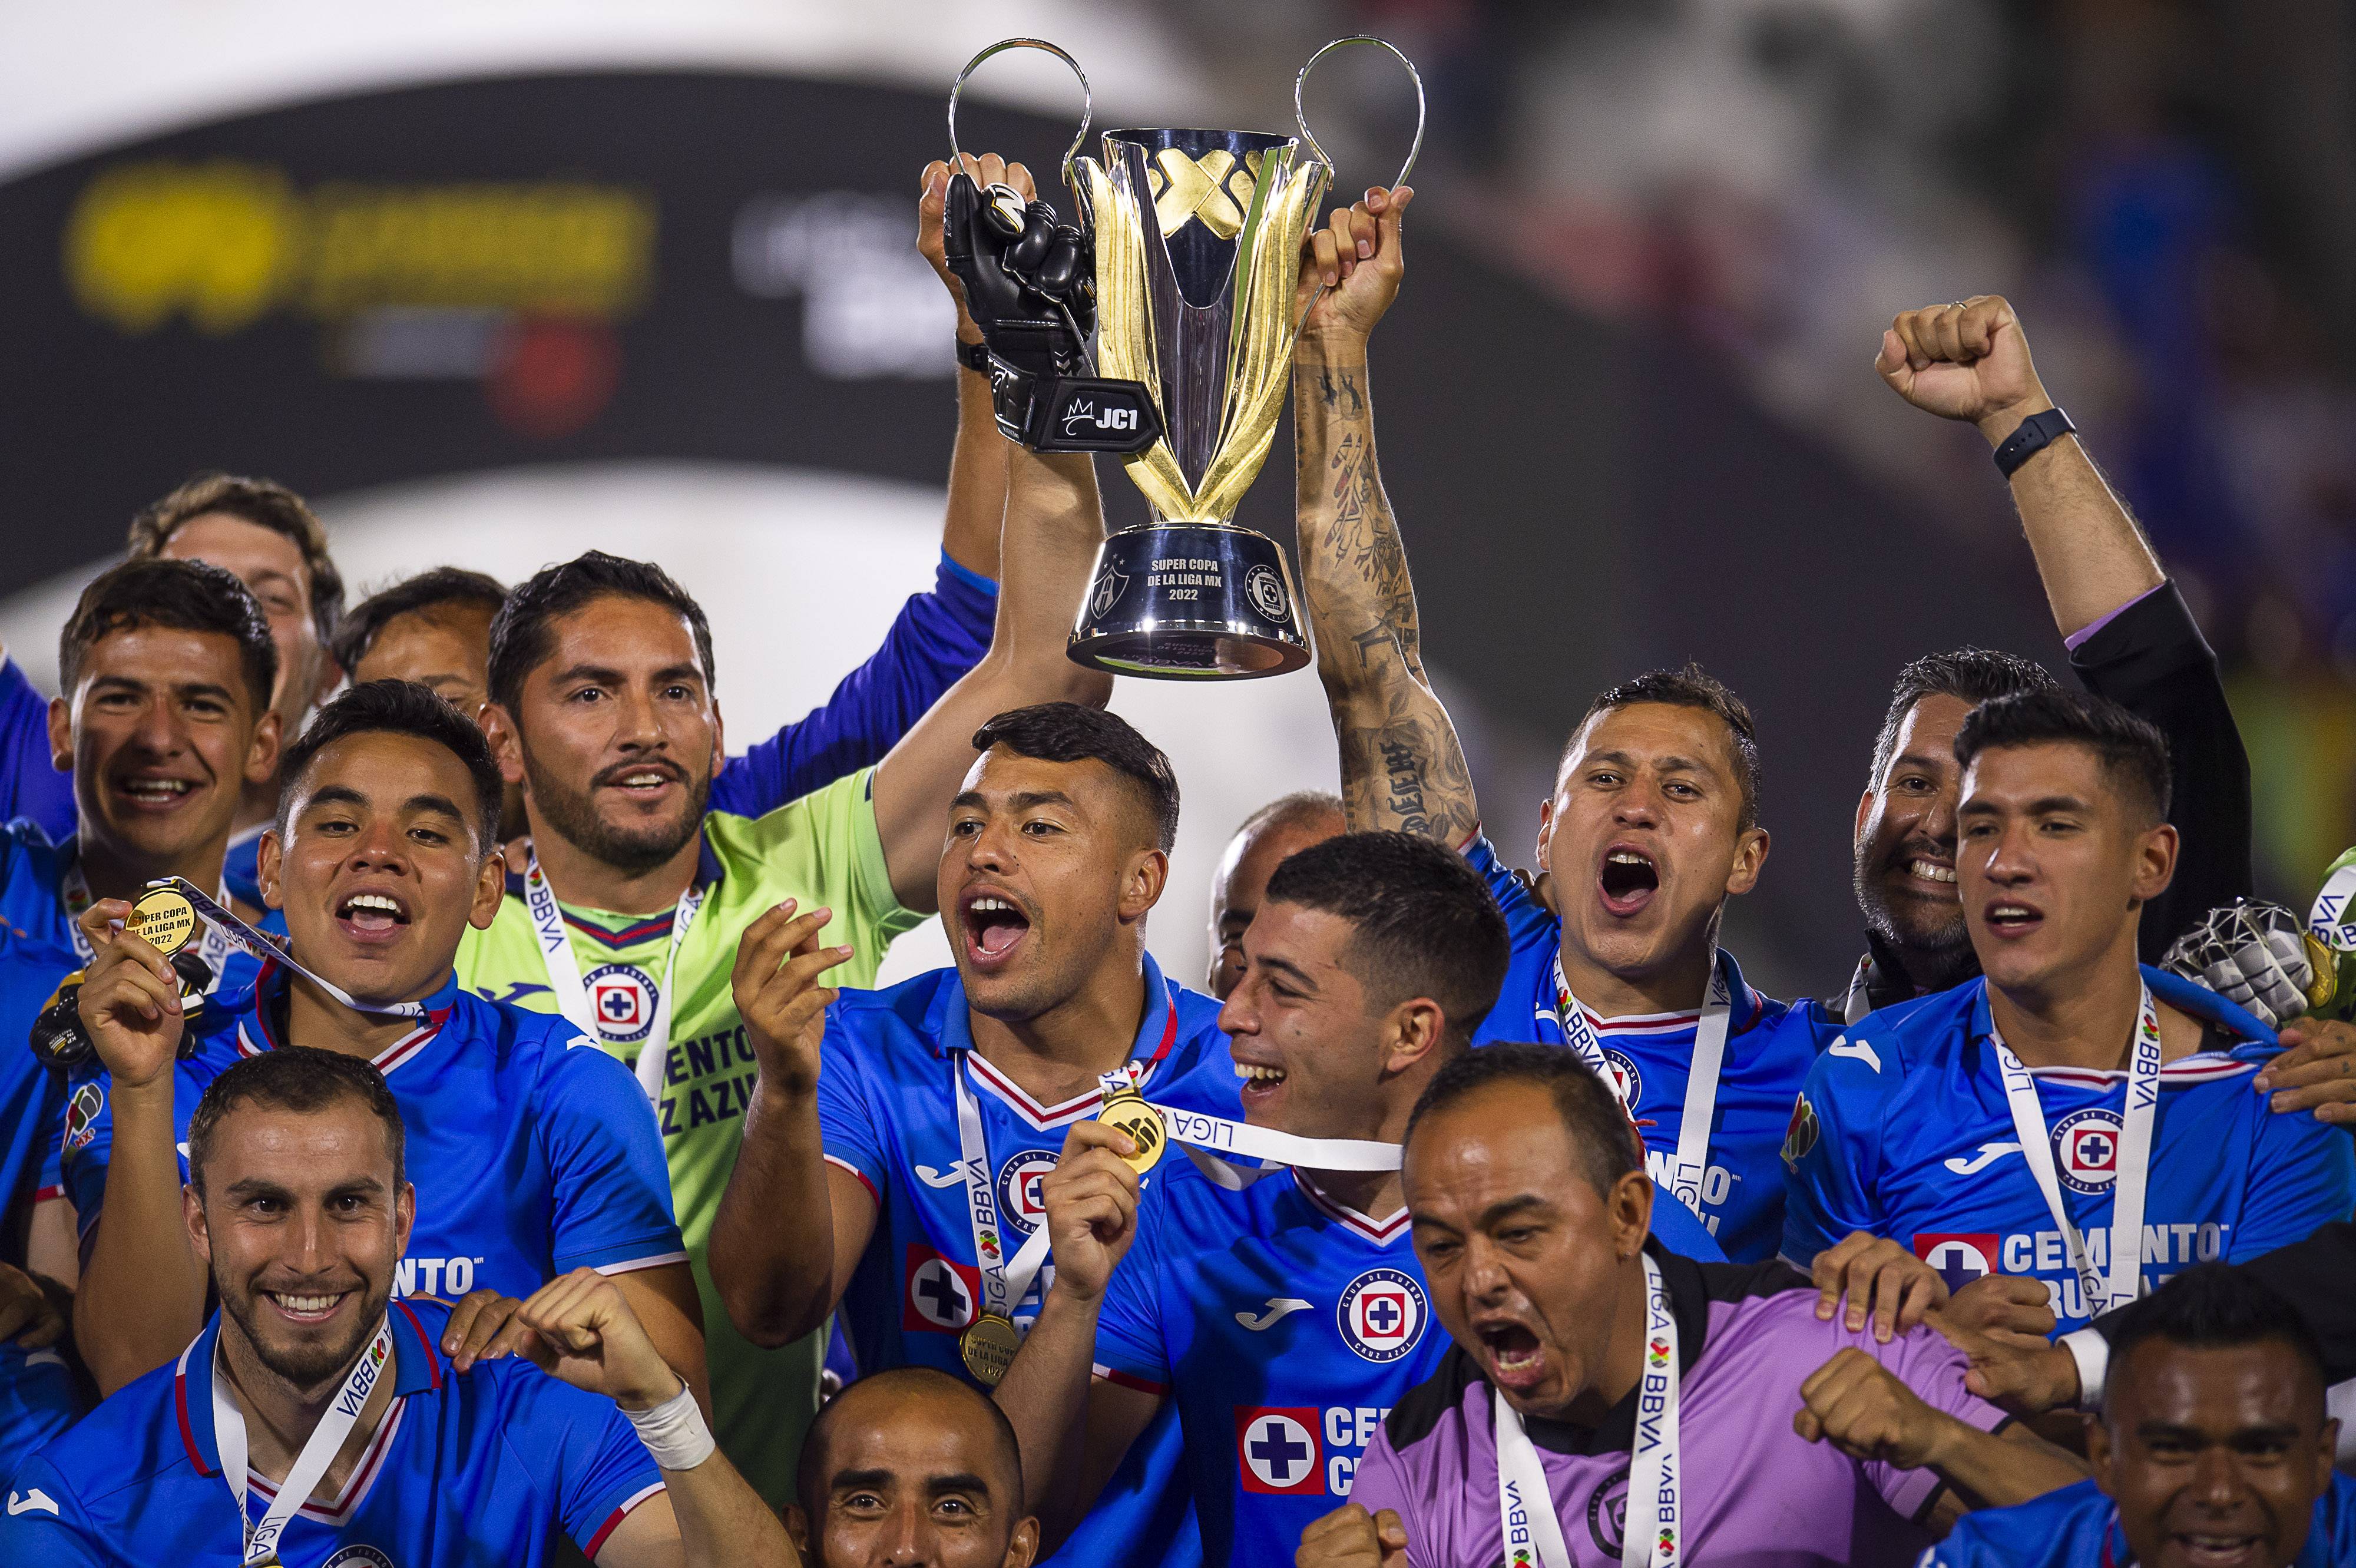 Cruz Azul campeón de la Supercopa de la Liga MX